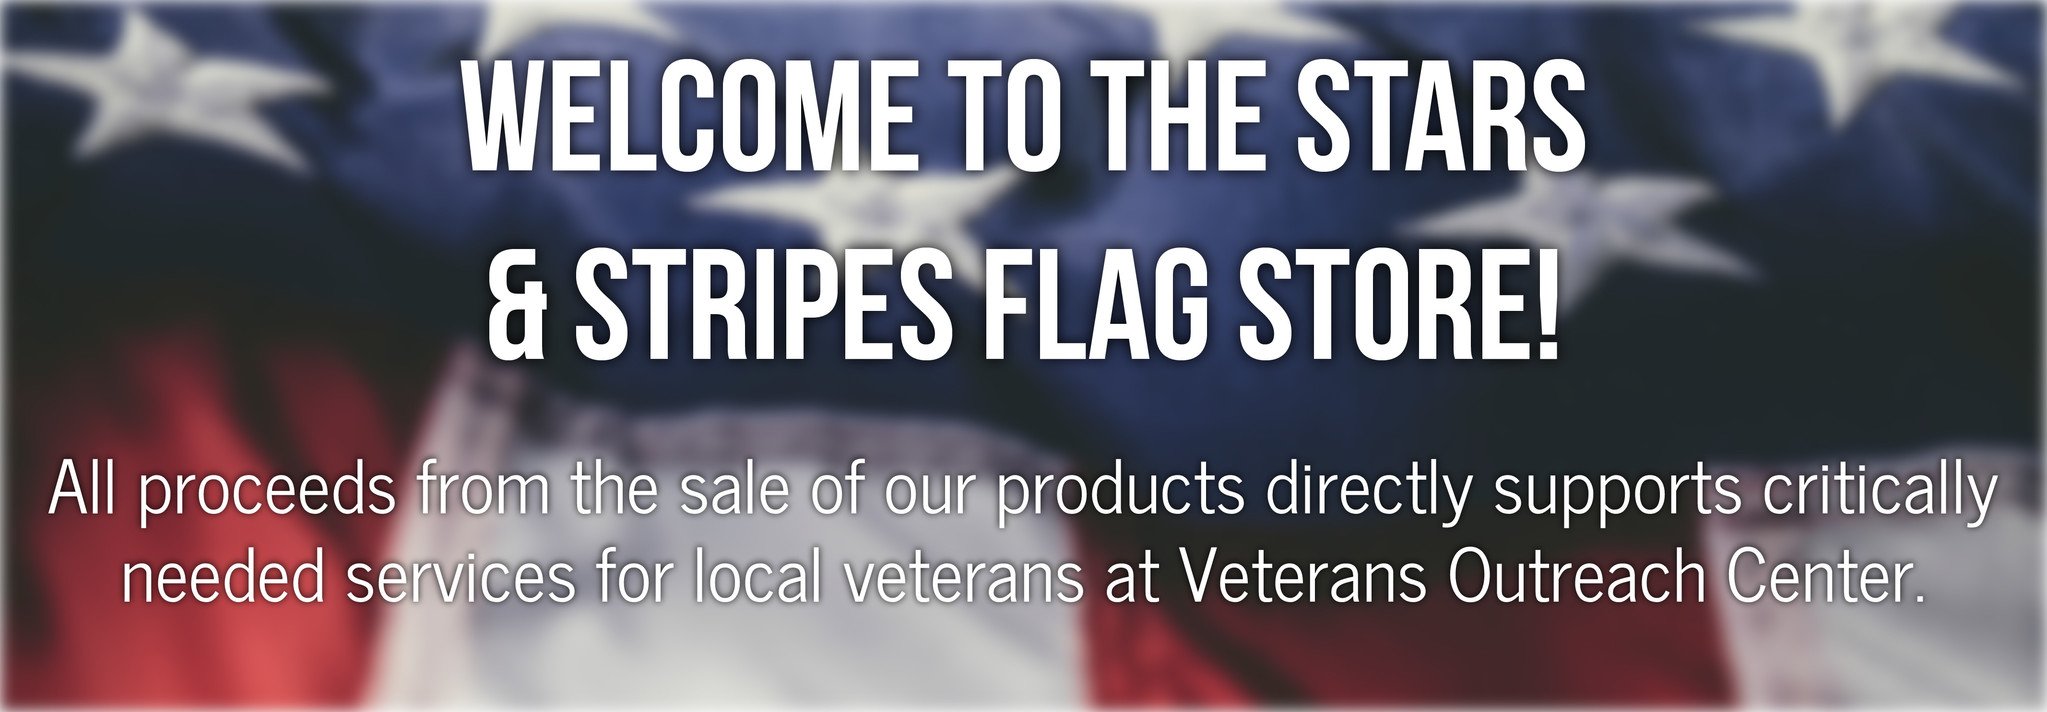 Air Force Plastic Travel Mug - Stars & Stripes, The Flag Store